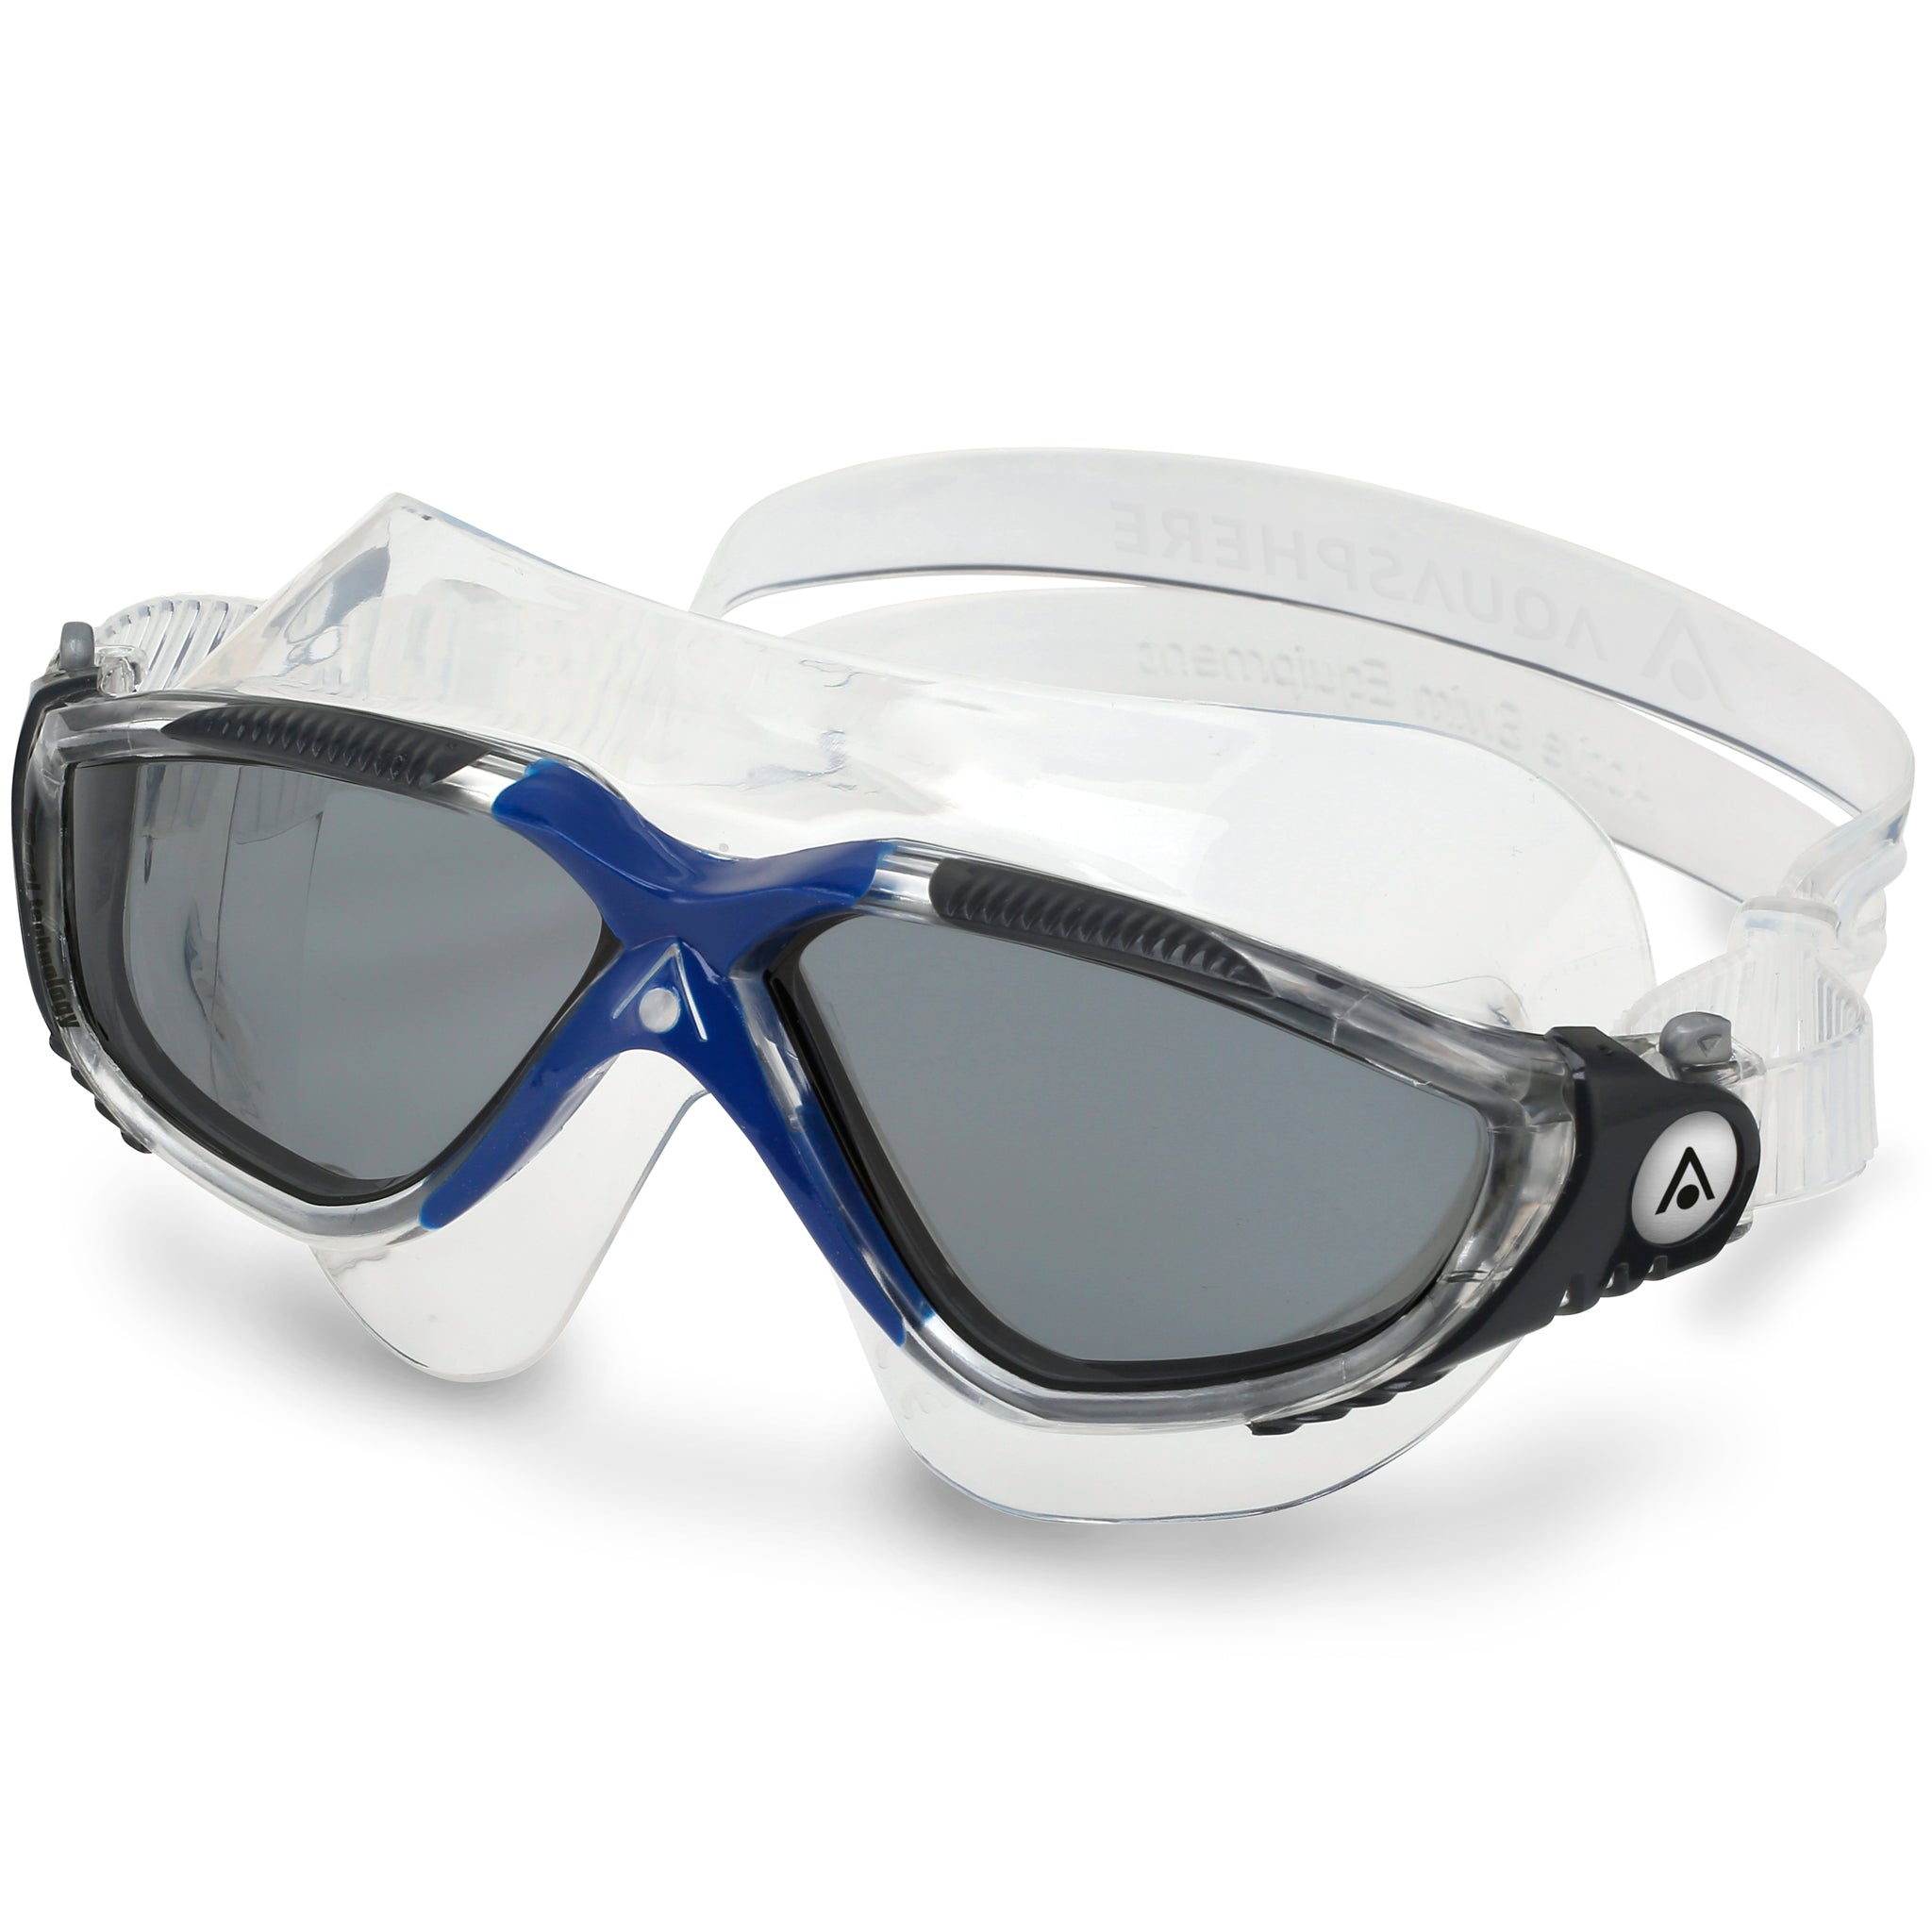 Aquasphere Vista Swimming Goggles Mask Smoke Tinted Lenses | Transparent/Dark Grey Left